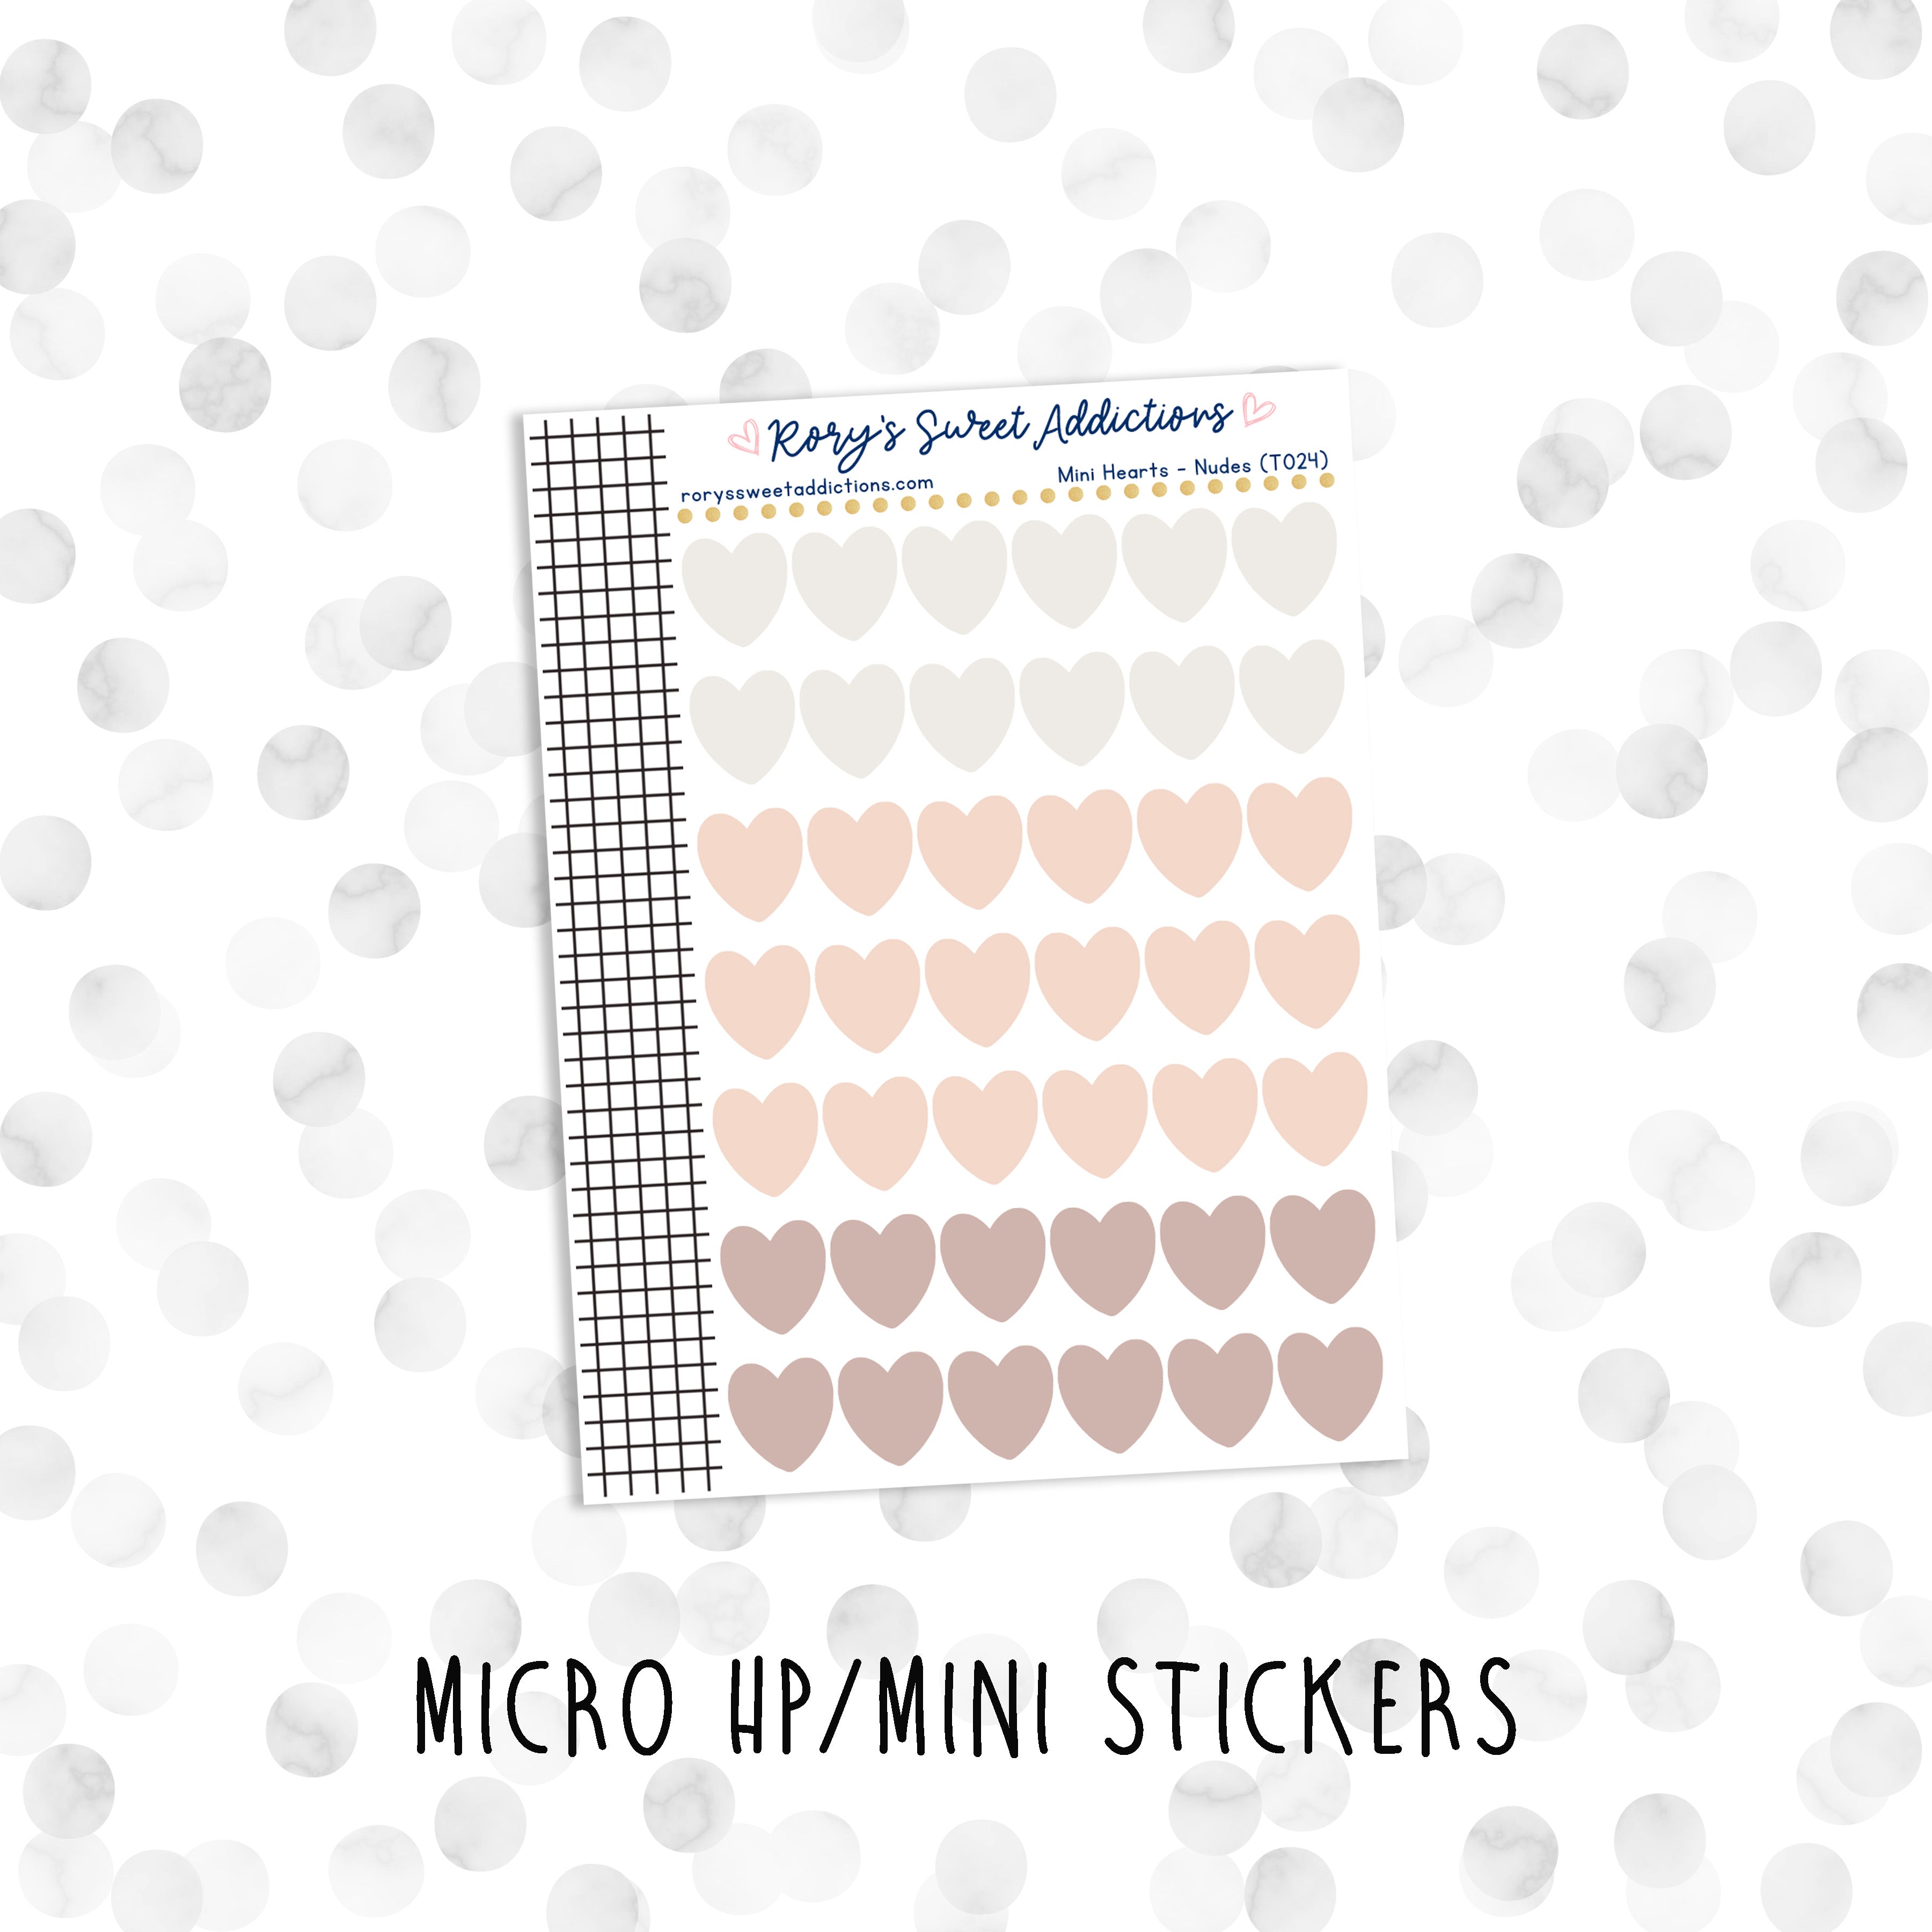 Mini Hearts - Nudes // Micro HP - Mini Stickers – Rory's Sweet